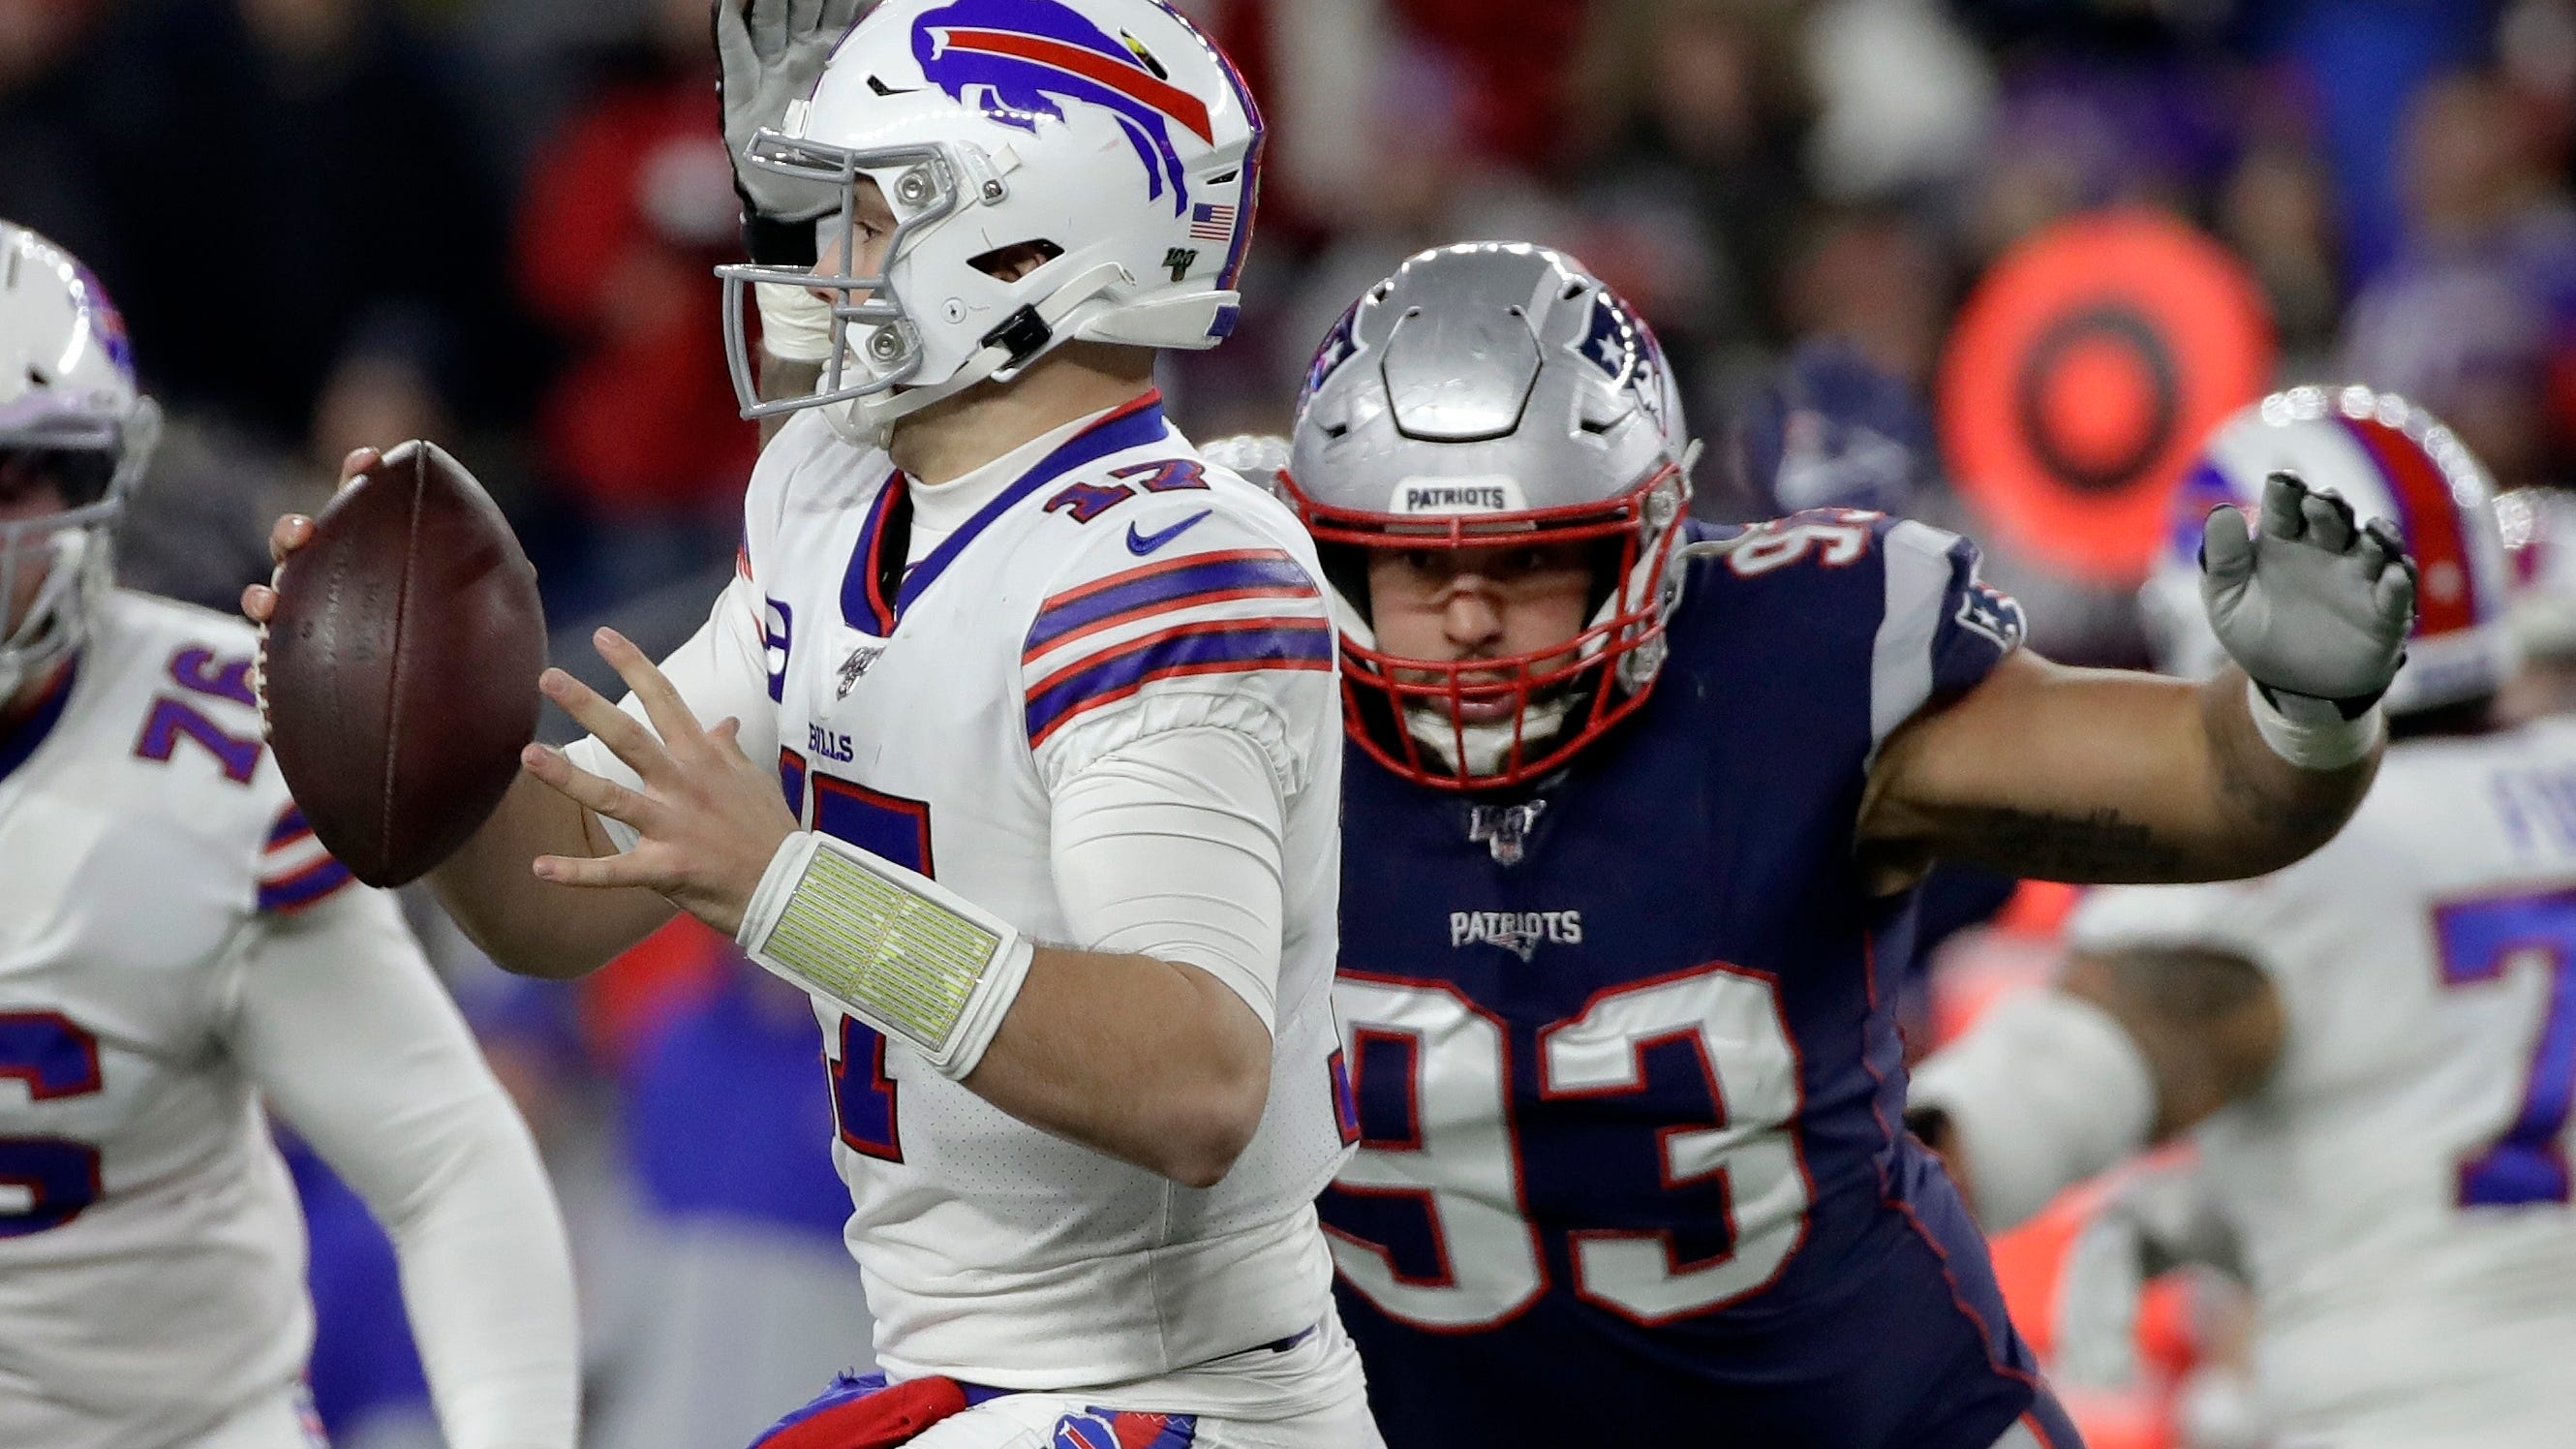 Despite loss, Bills in good shape going into playoffs